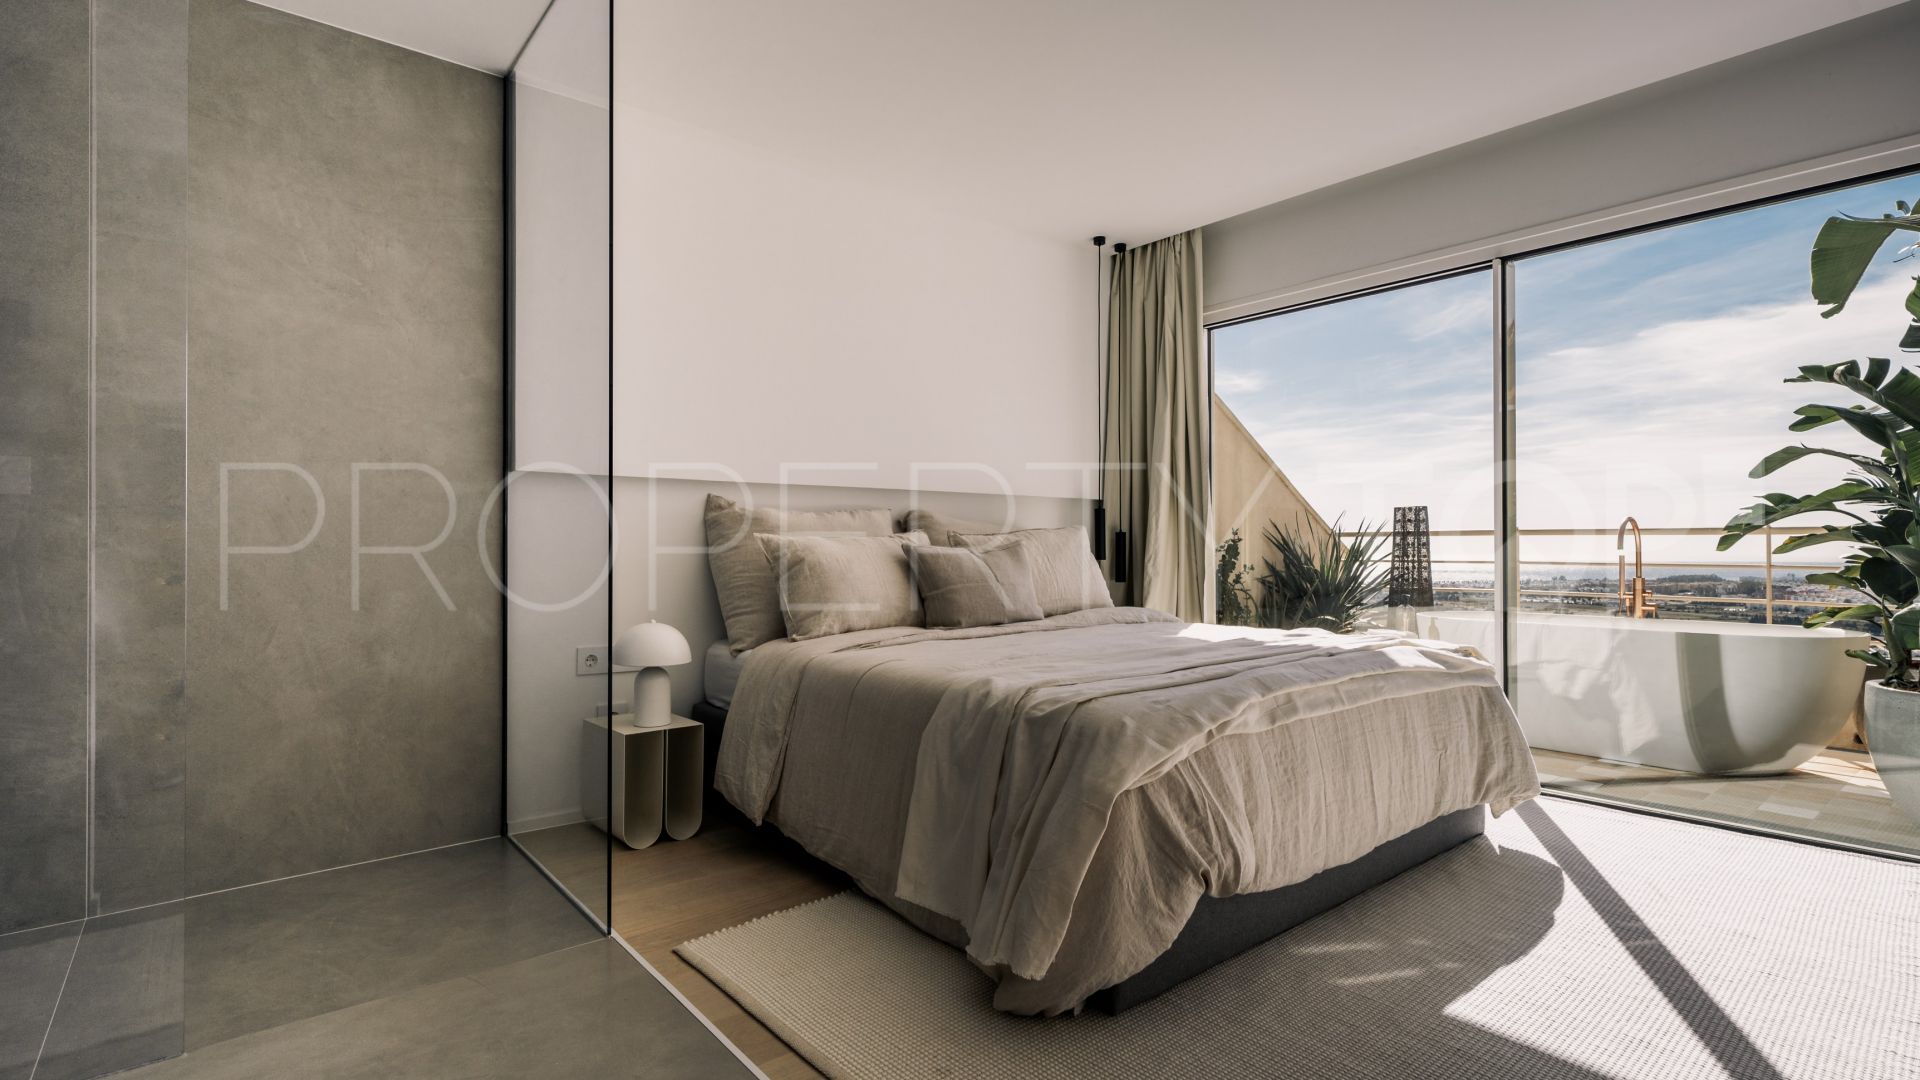 3 bedrooms Magna Marbella duplex penthouse for sale